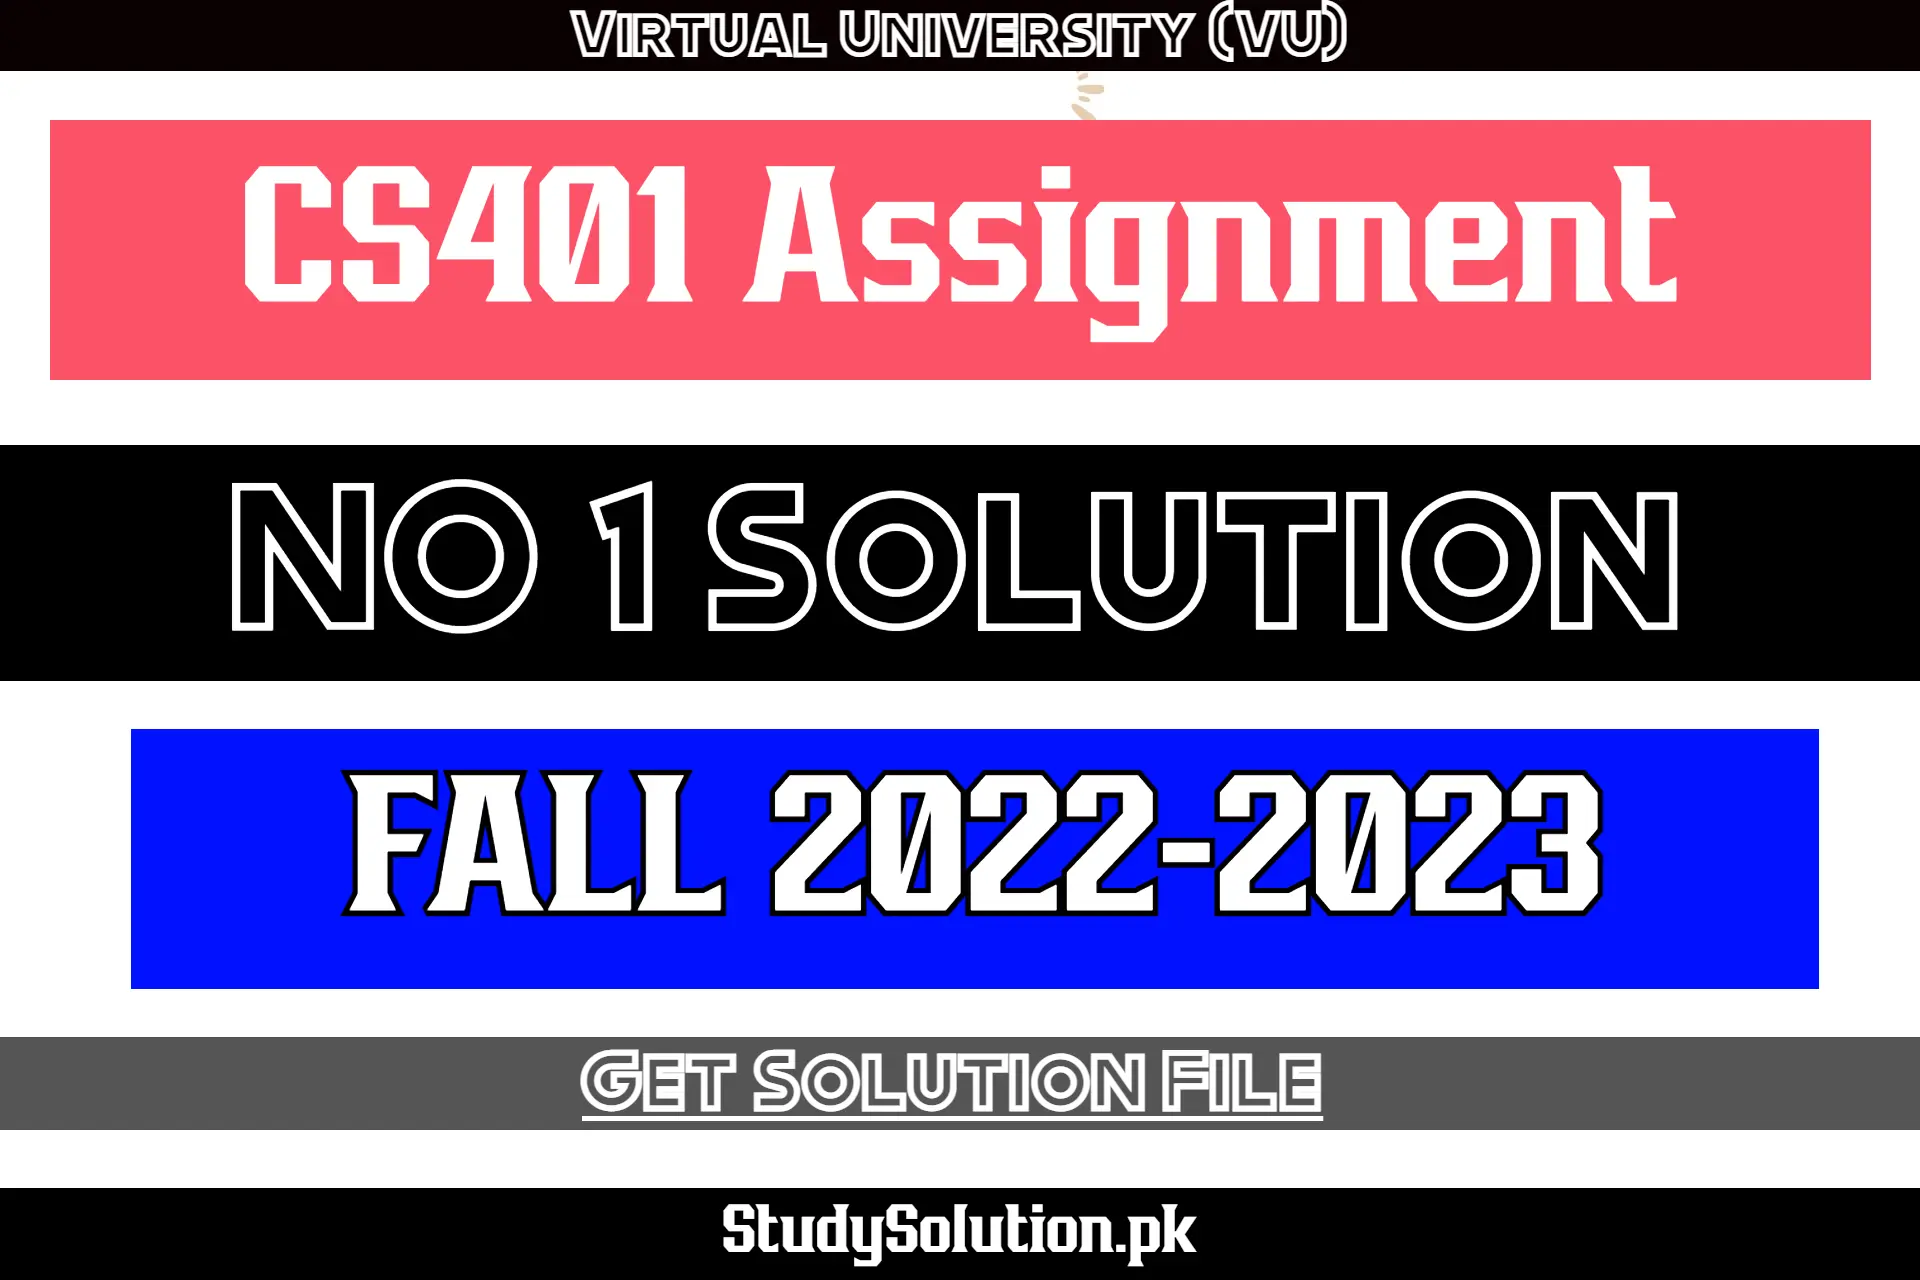 CS401 Assignment No 1 Solution Fall 2022